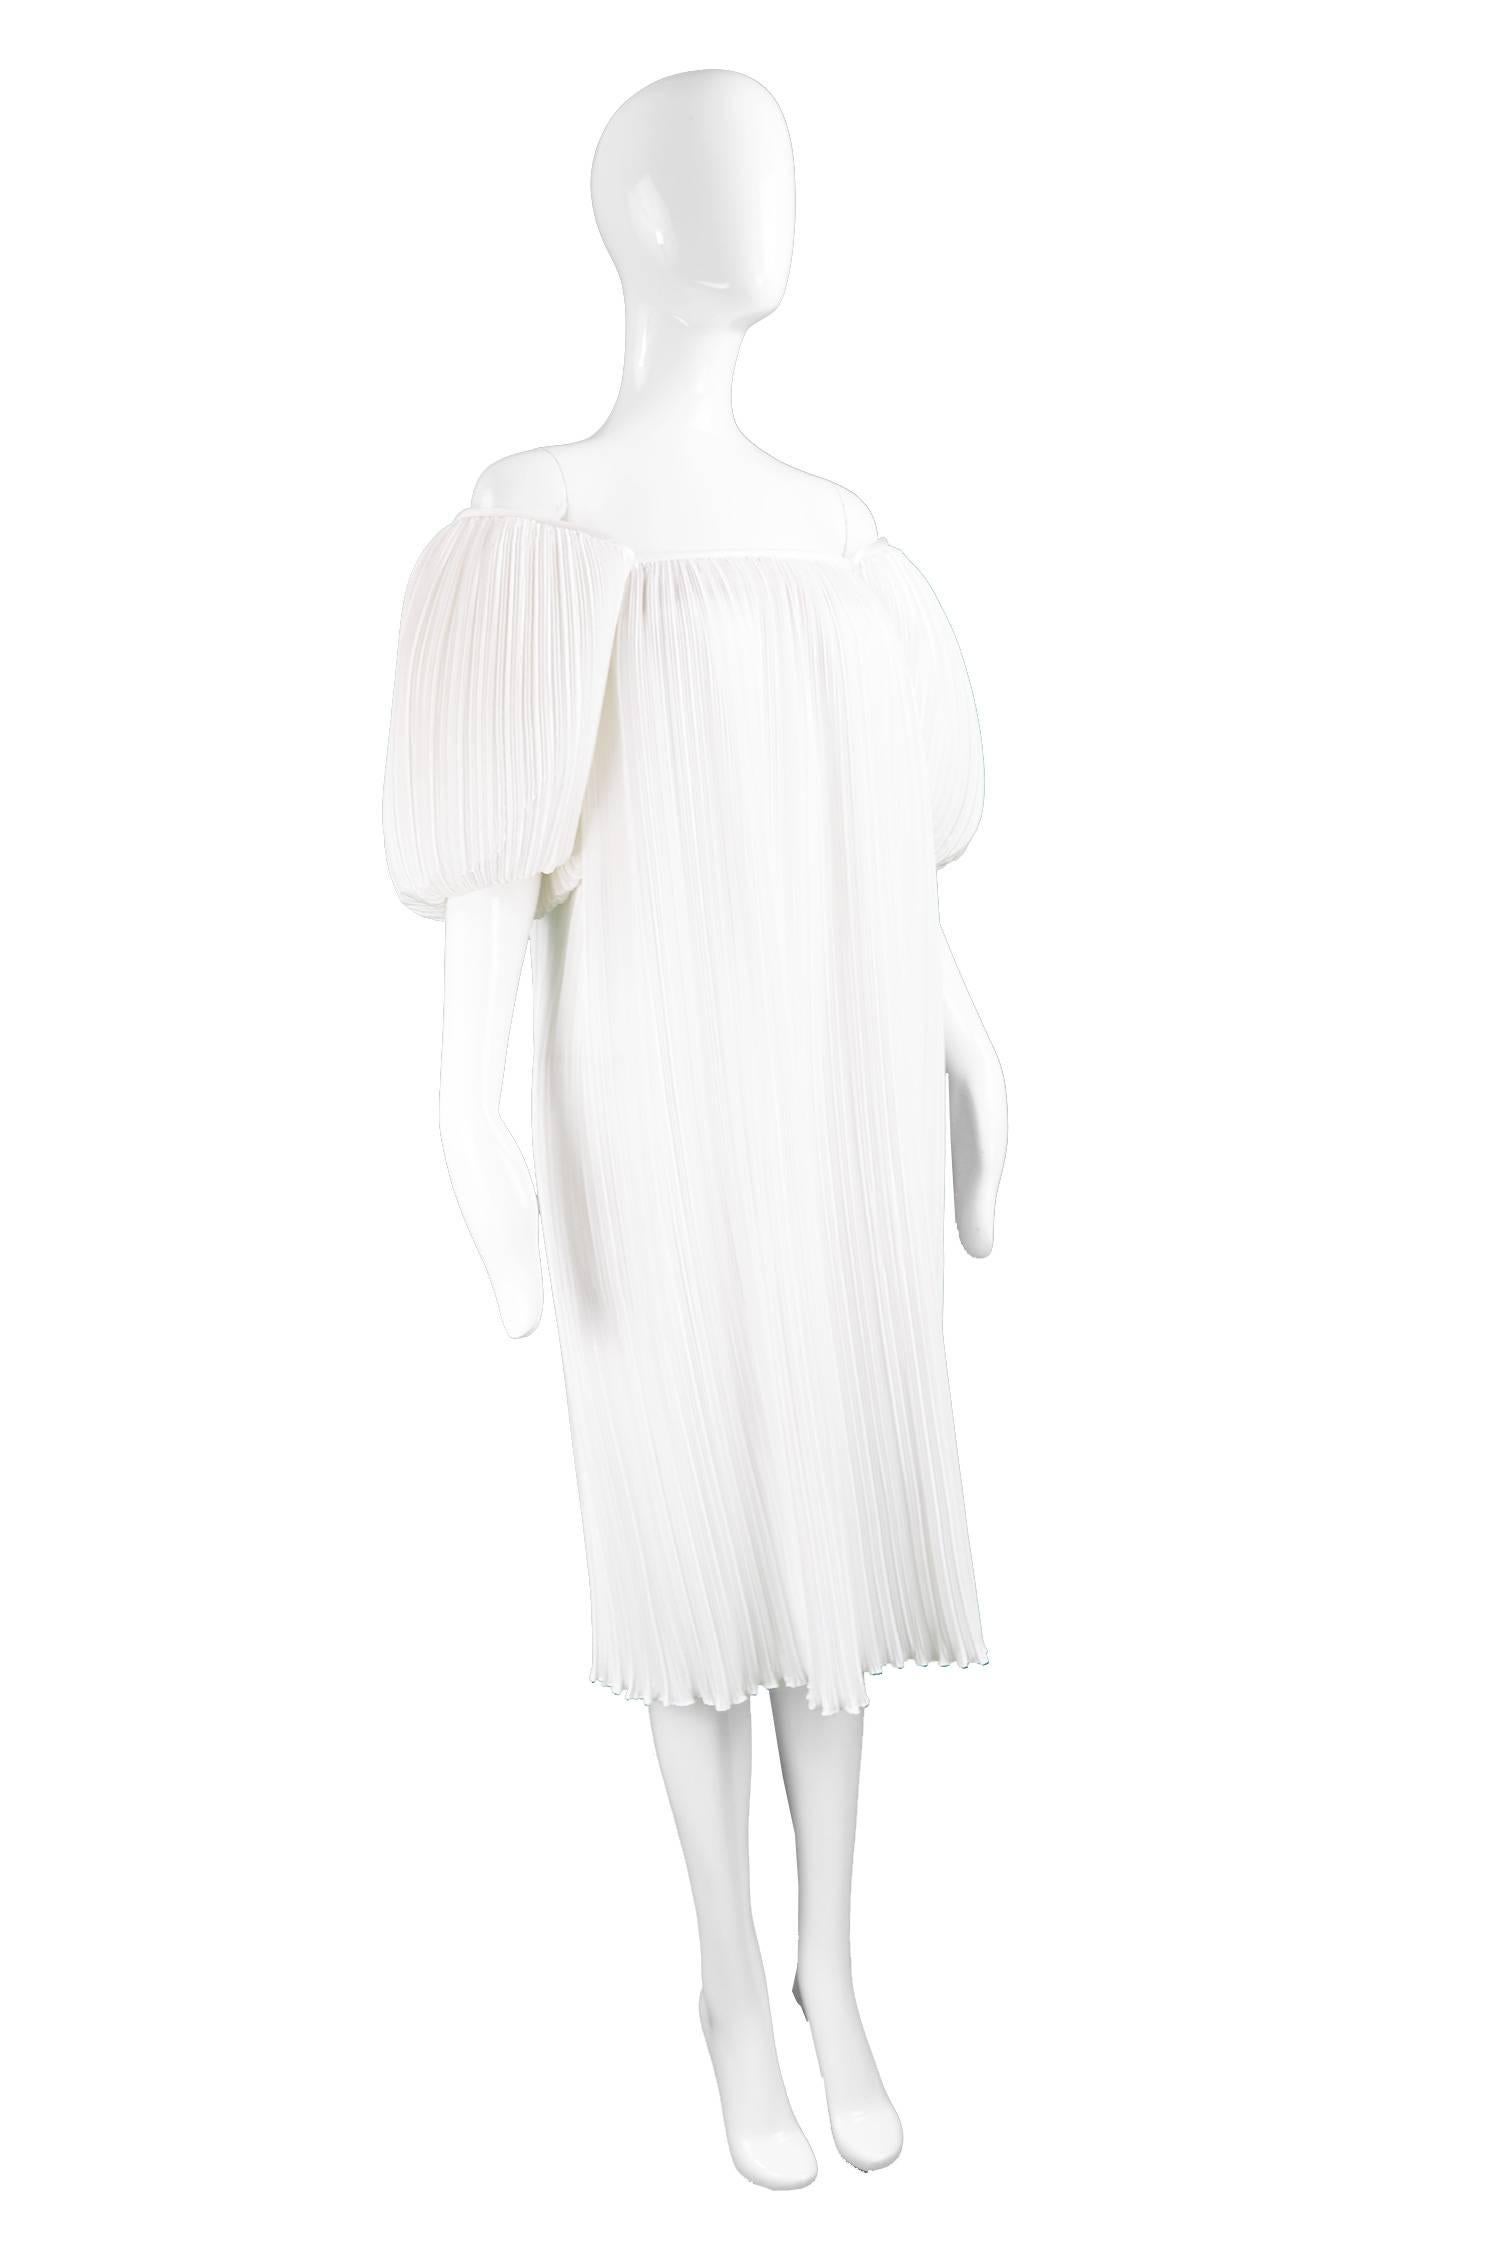 S.G. Gilbert for I. Magnin Ethereal White Vintage Fortuny Pleat Dress, 1980s 1